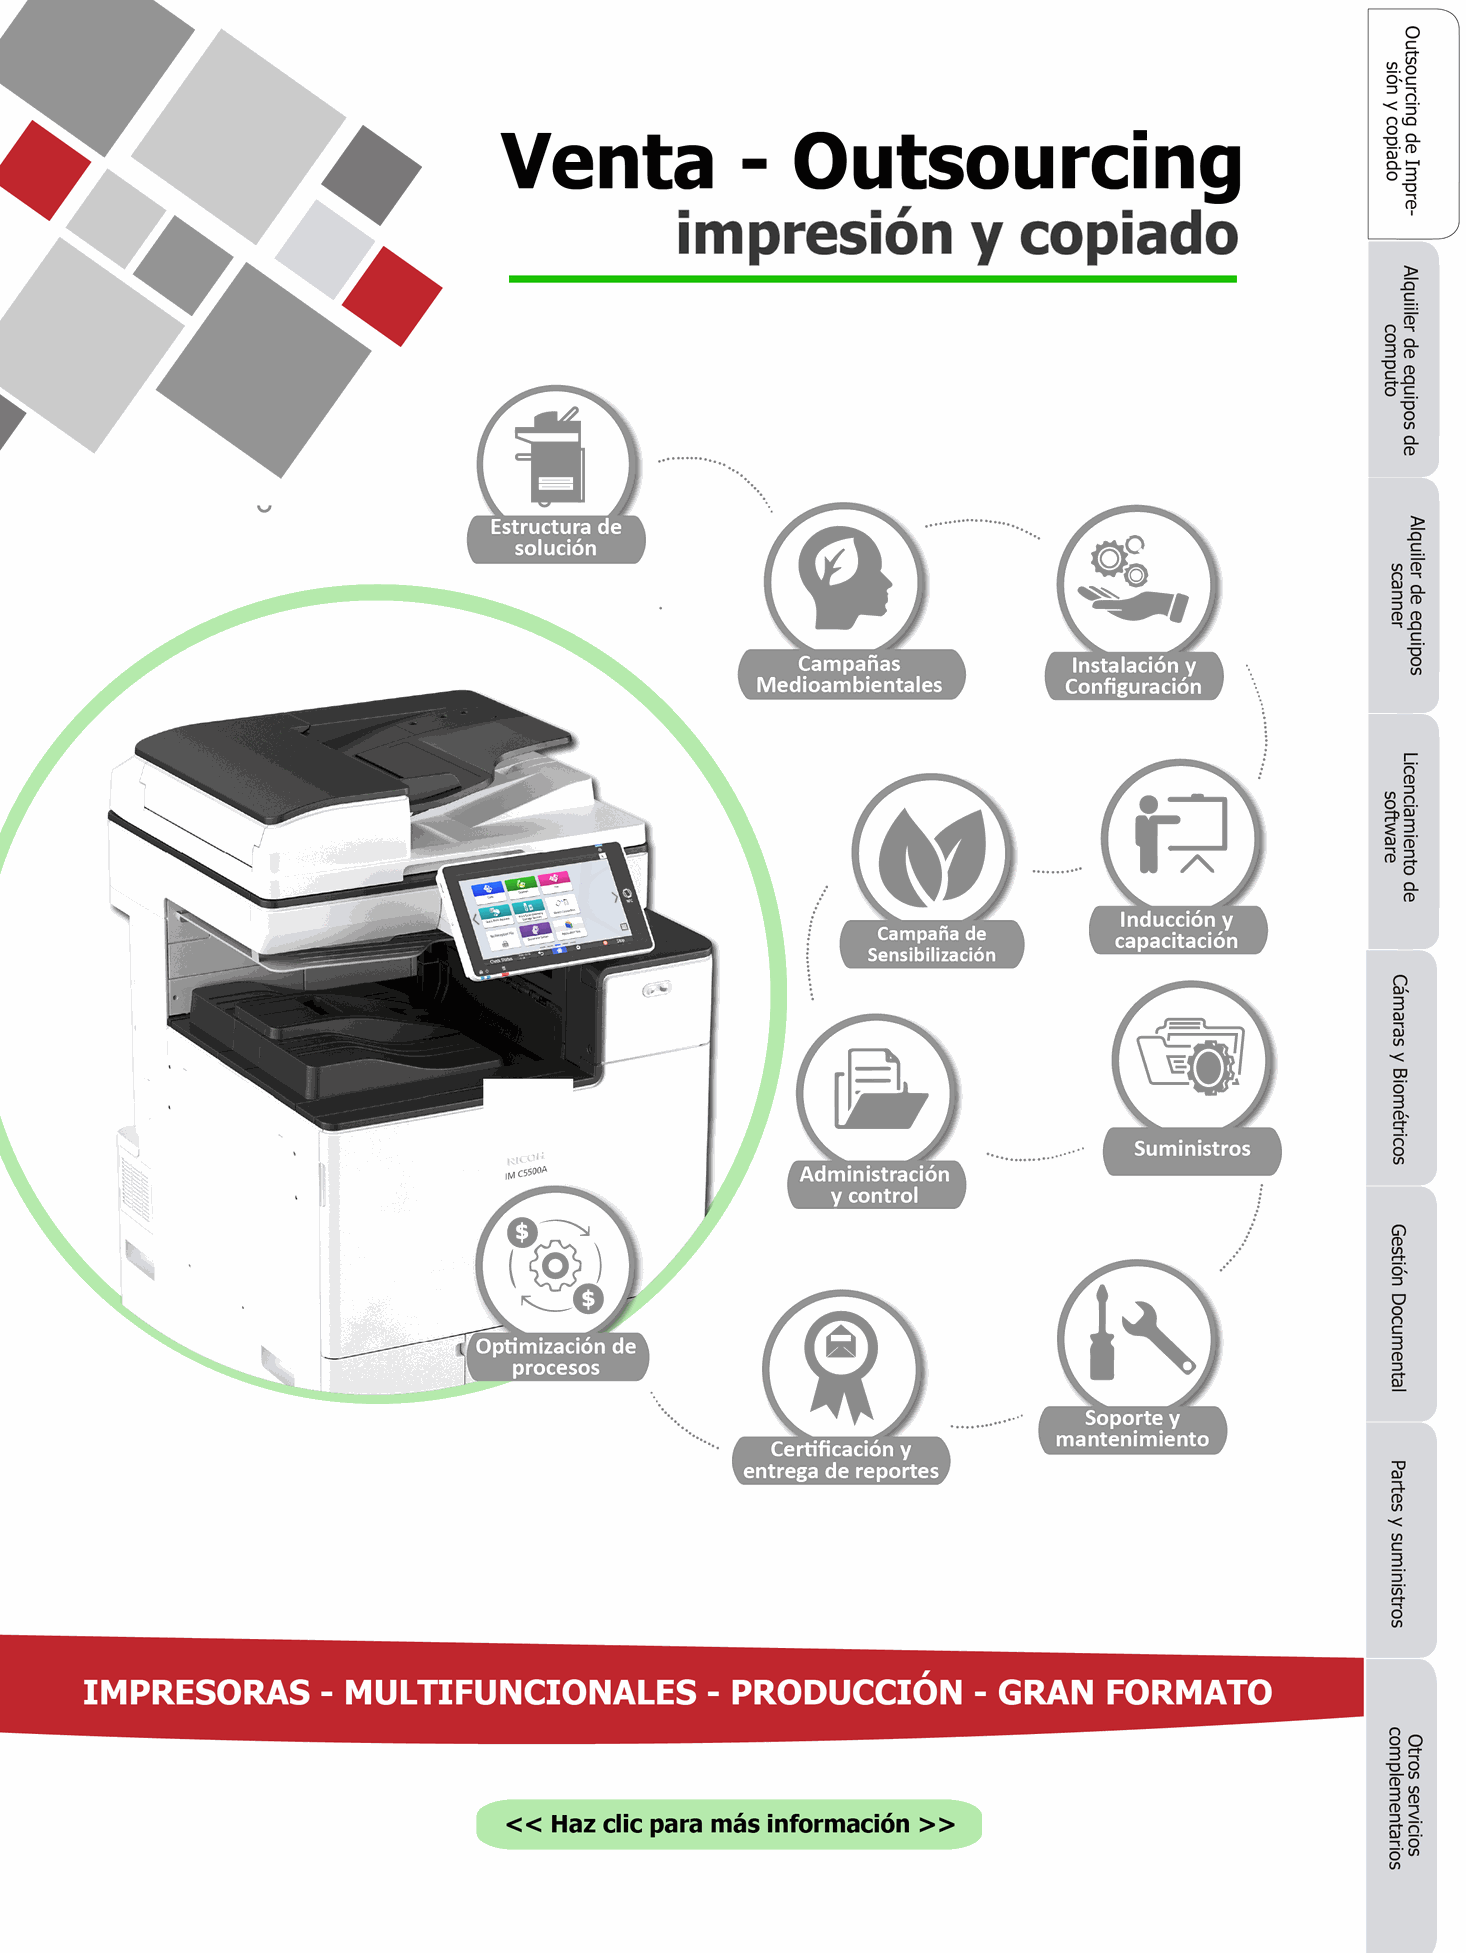 alquiler de fotocopiadoras